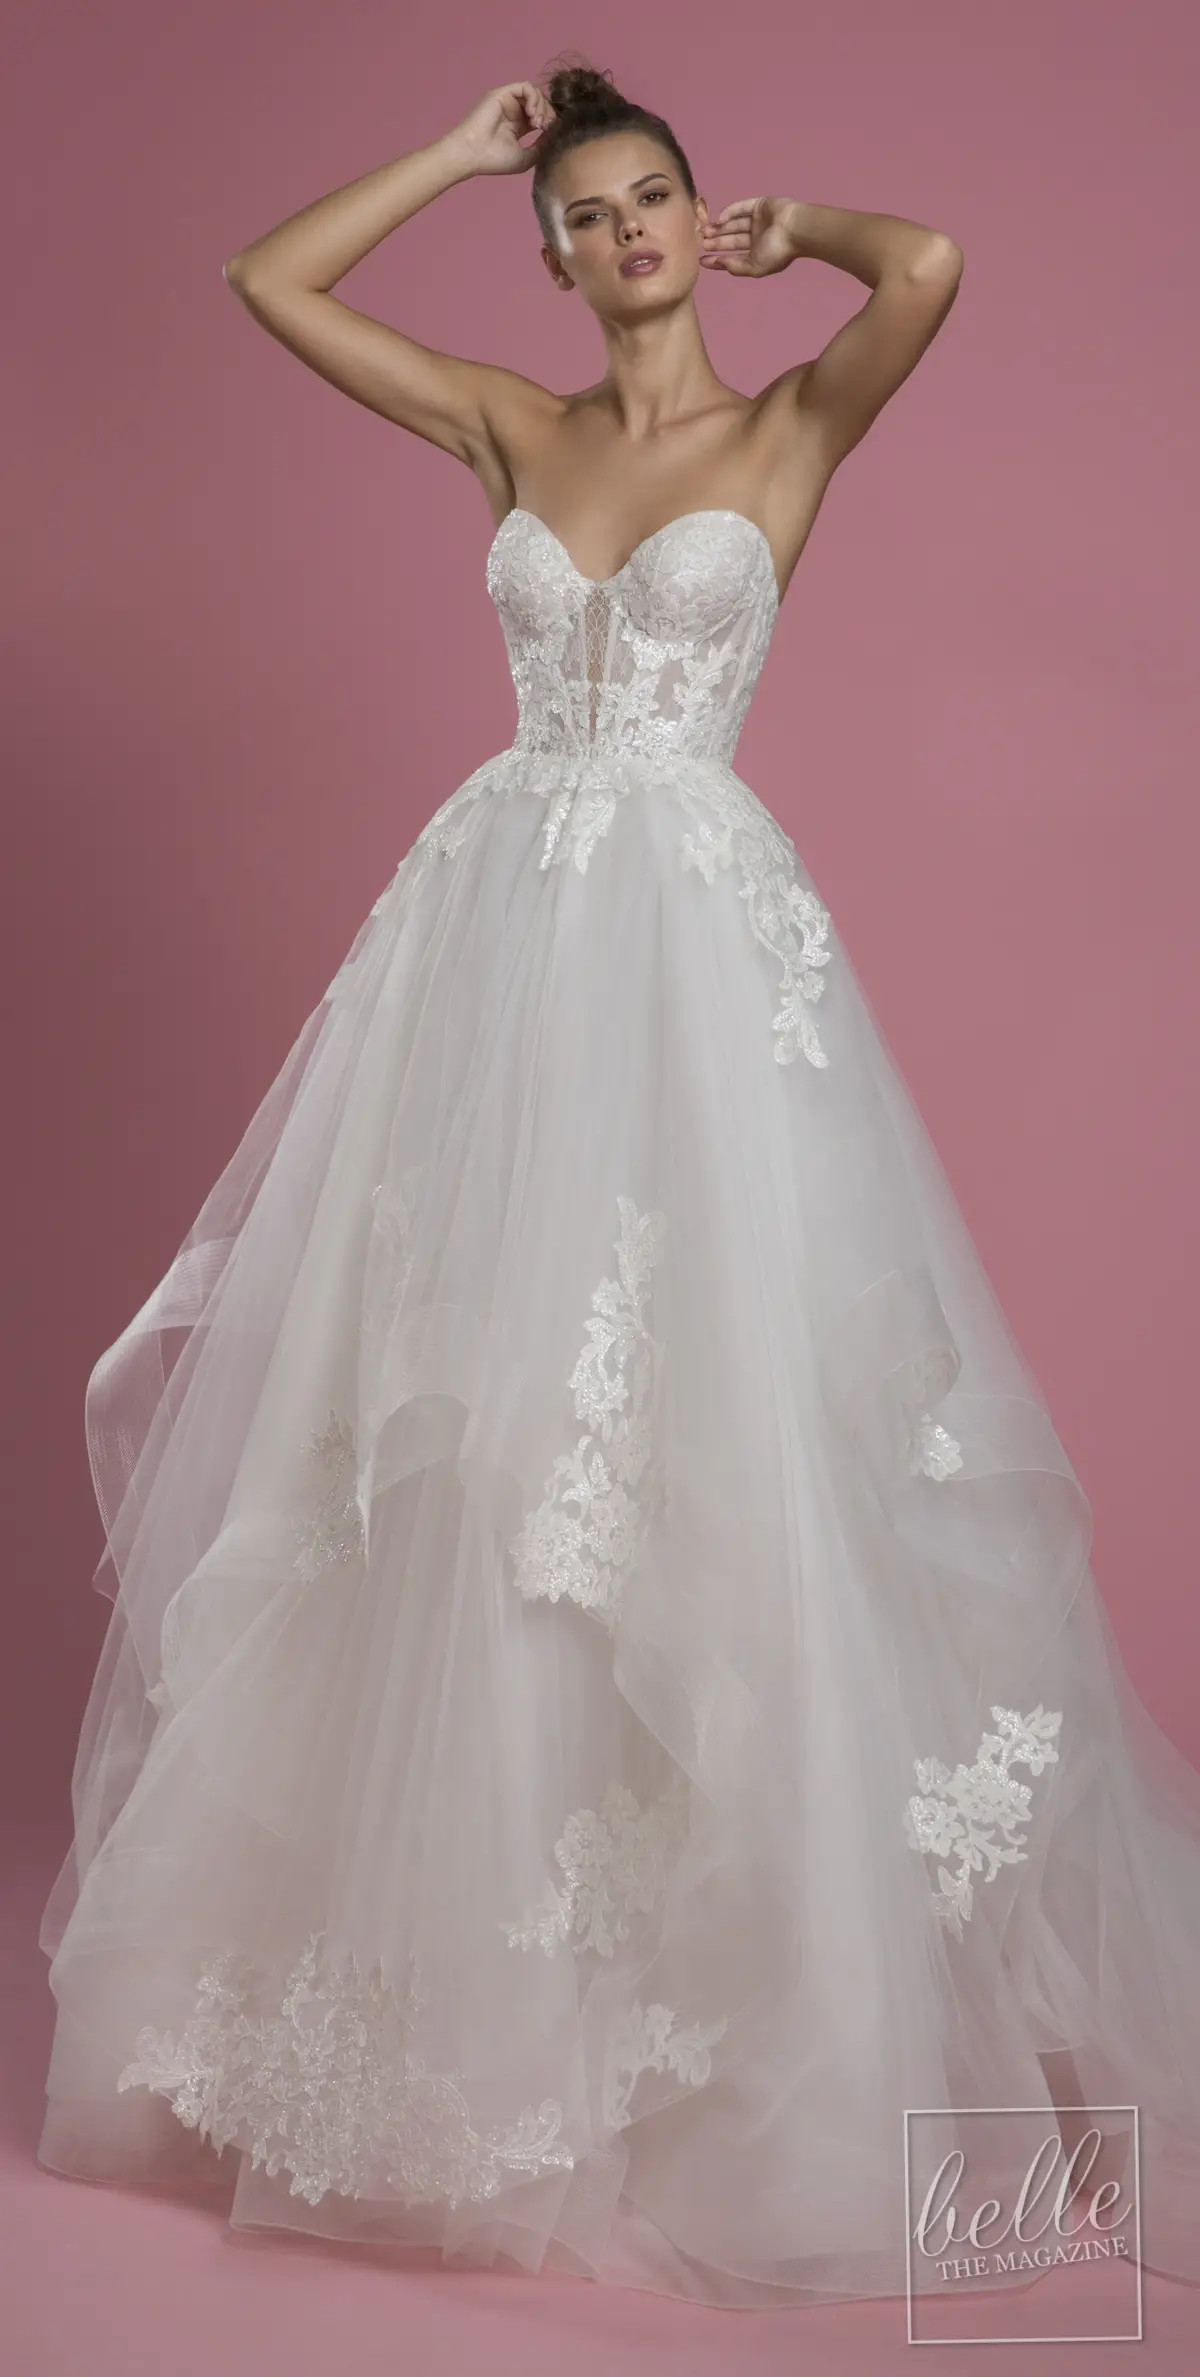 Wedding dress trends 2021 - Ruffles - PNINA TORNAI 2118